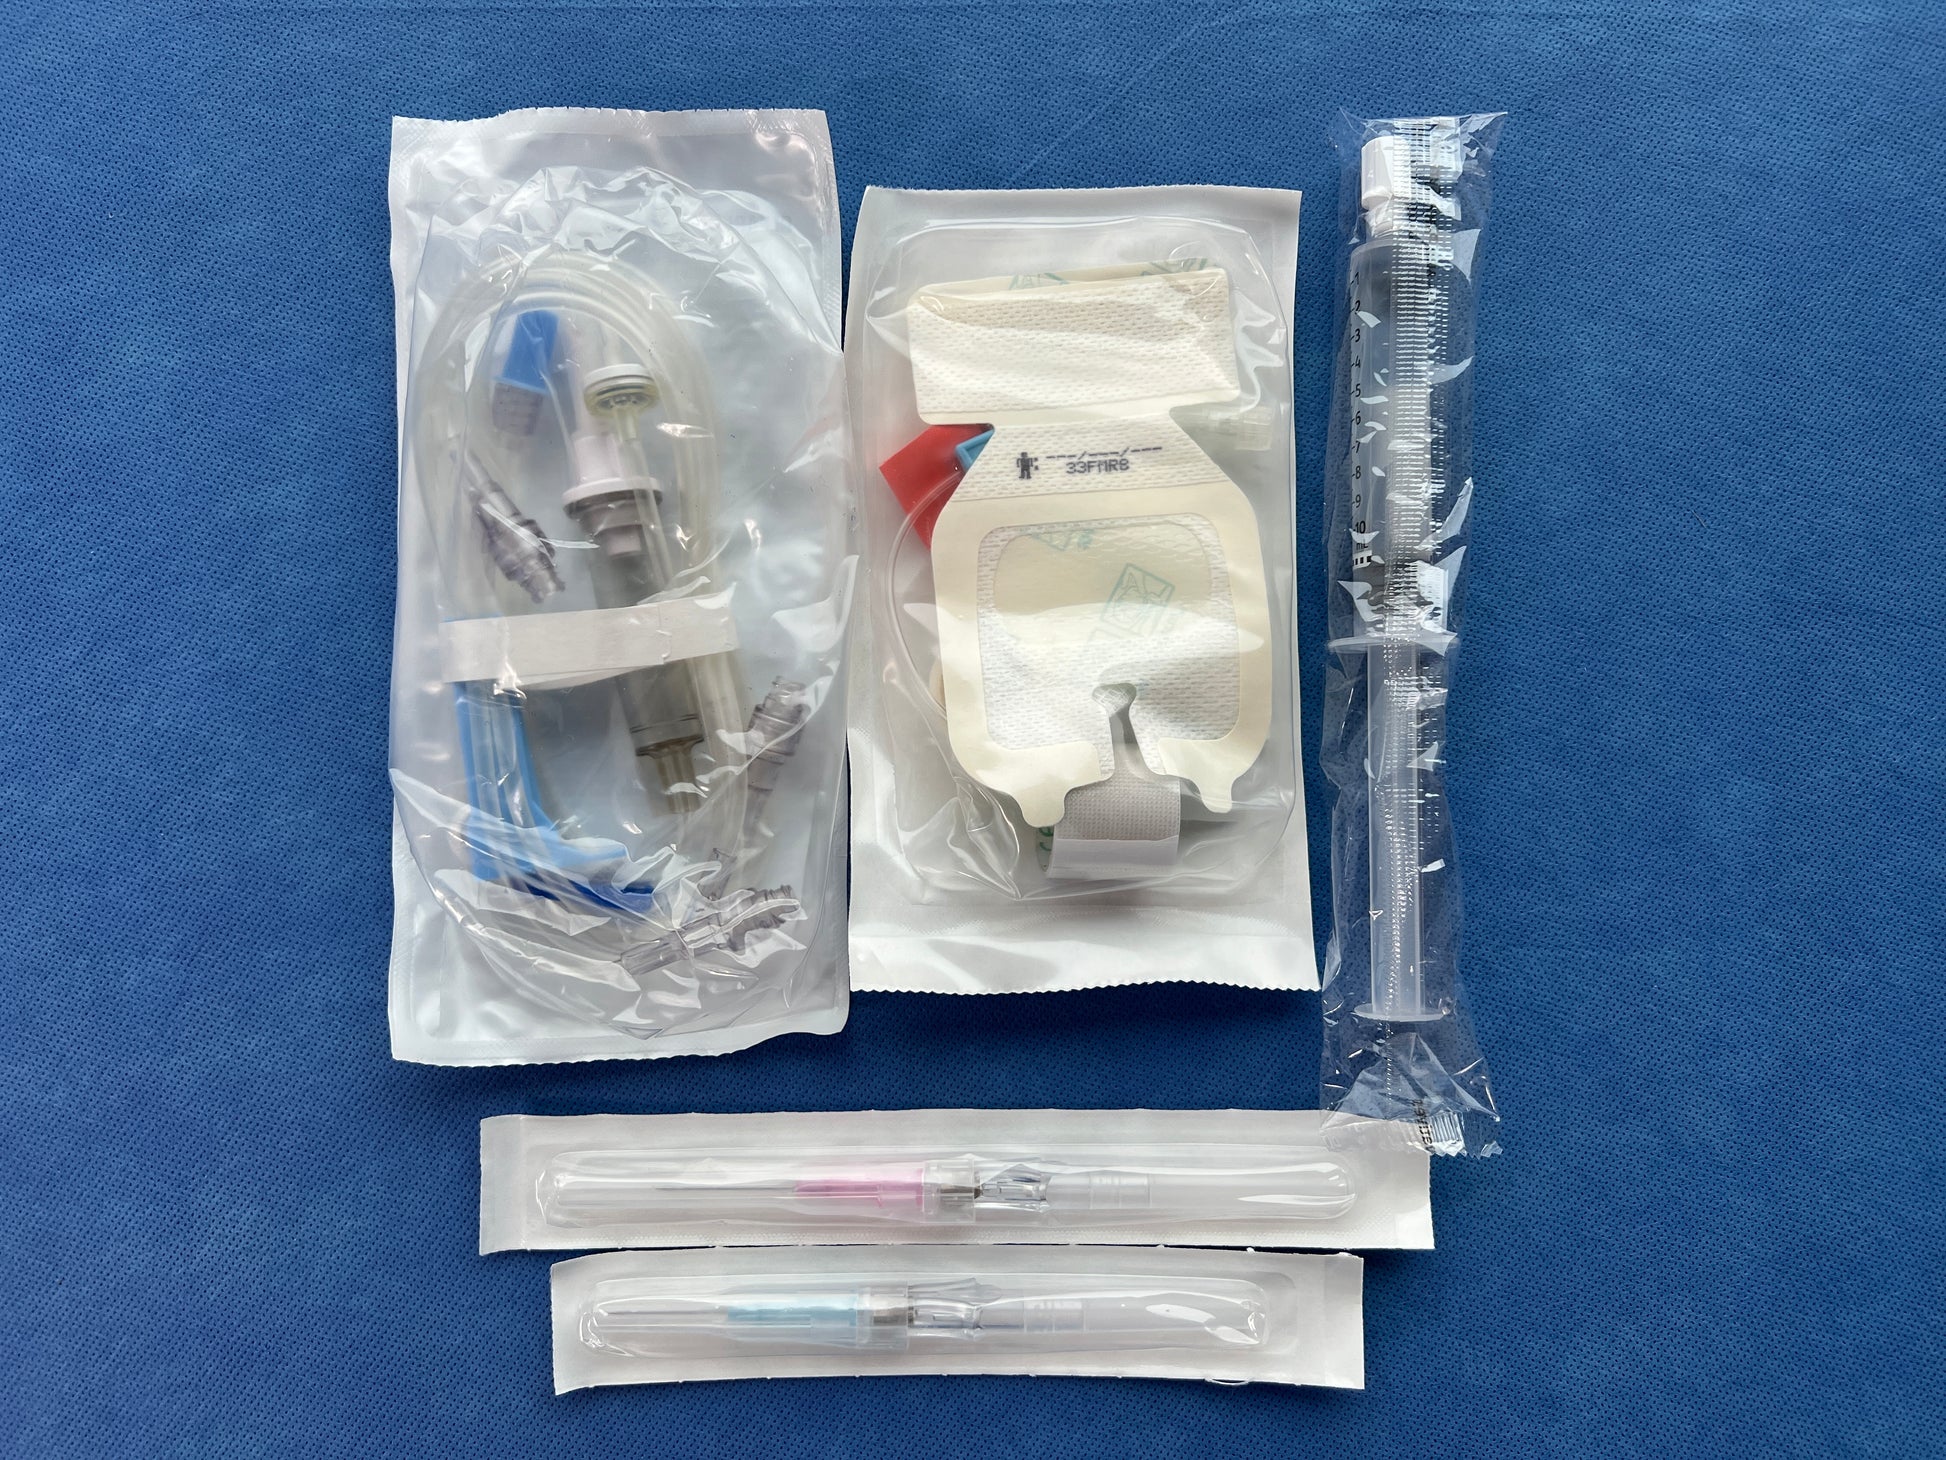 I. V. Starter Kit – New Hlink Medical Corporation